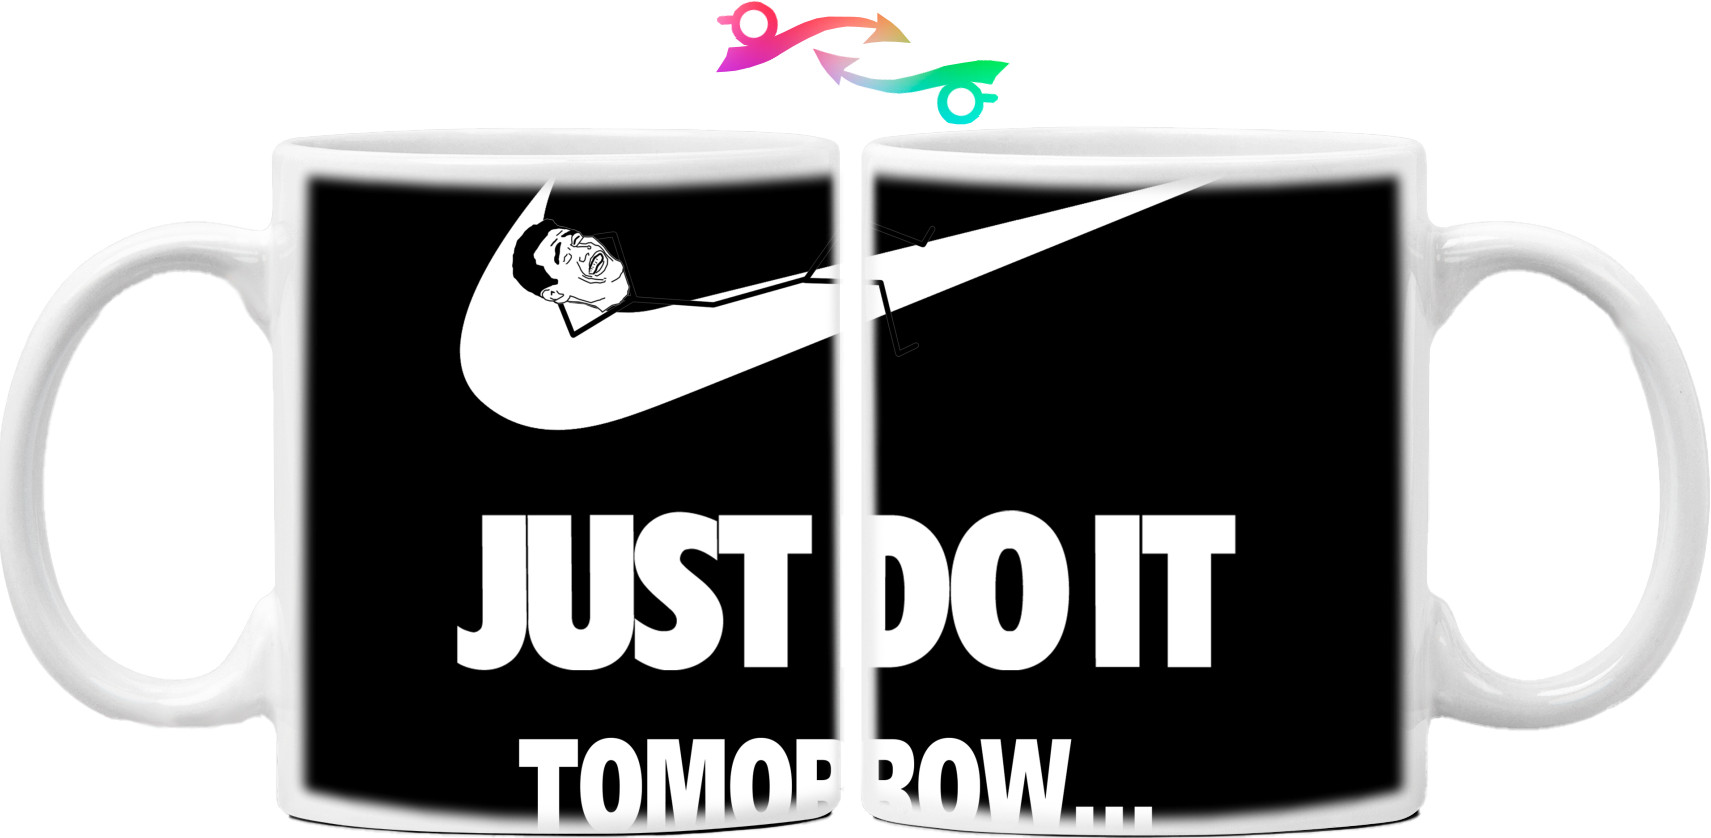 Just do it Tomorrow